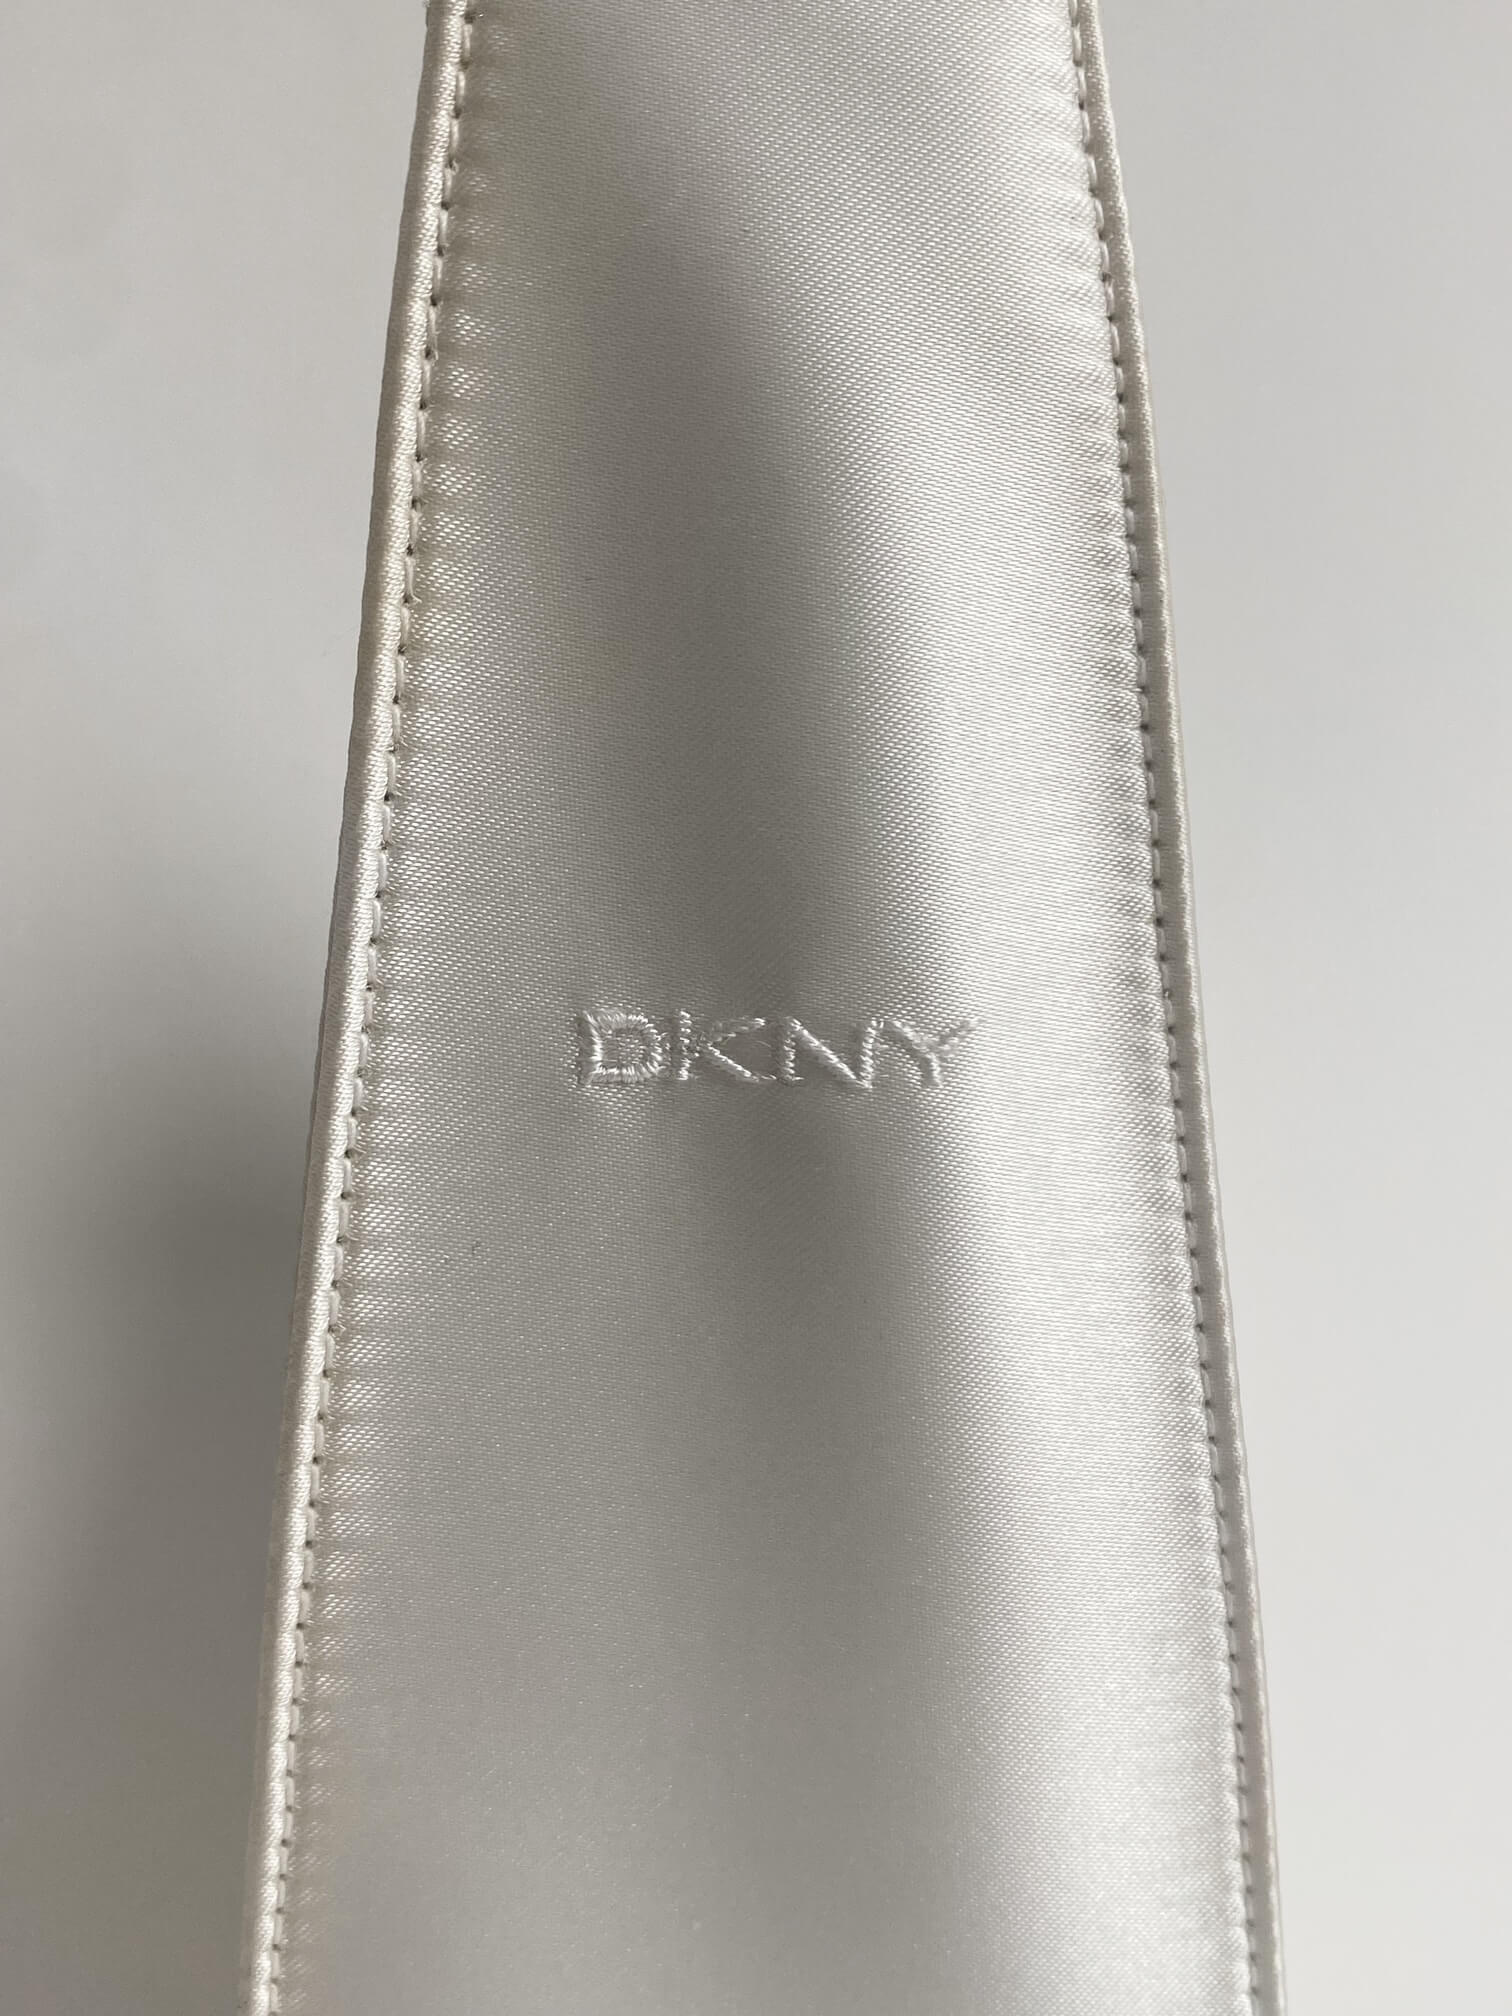 Vintage DKNY Satin Mini Bag